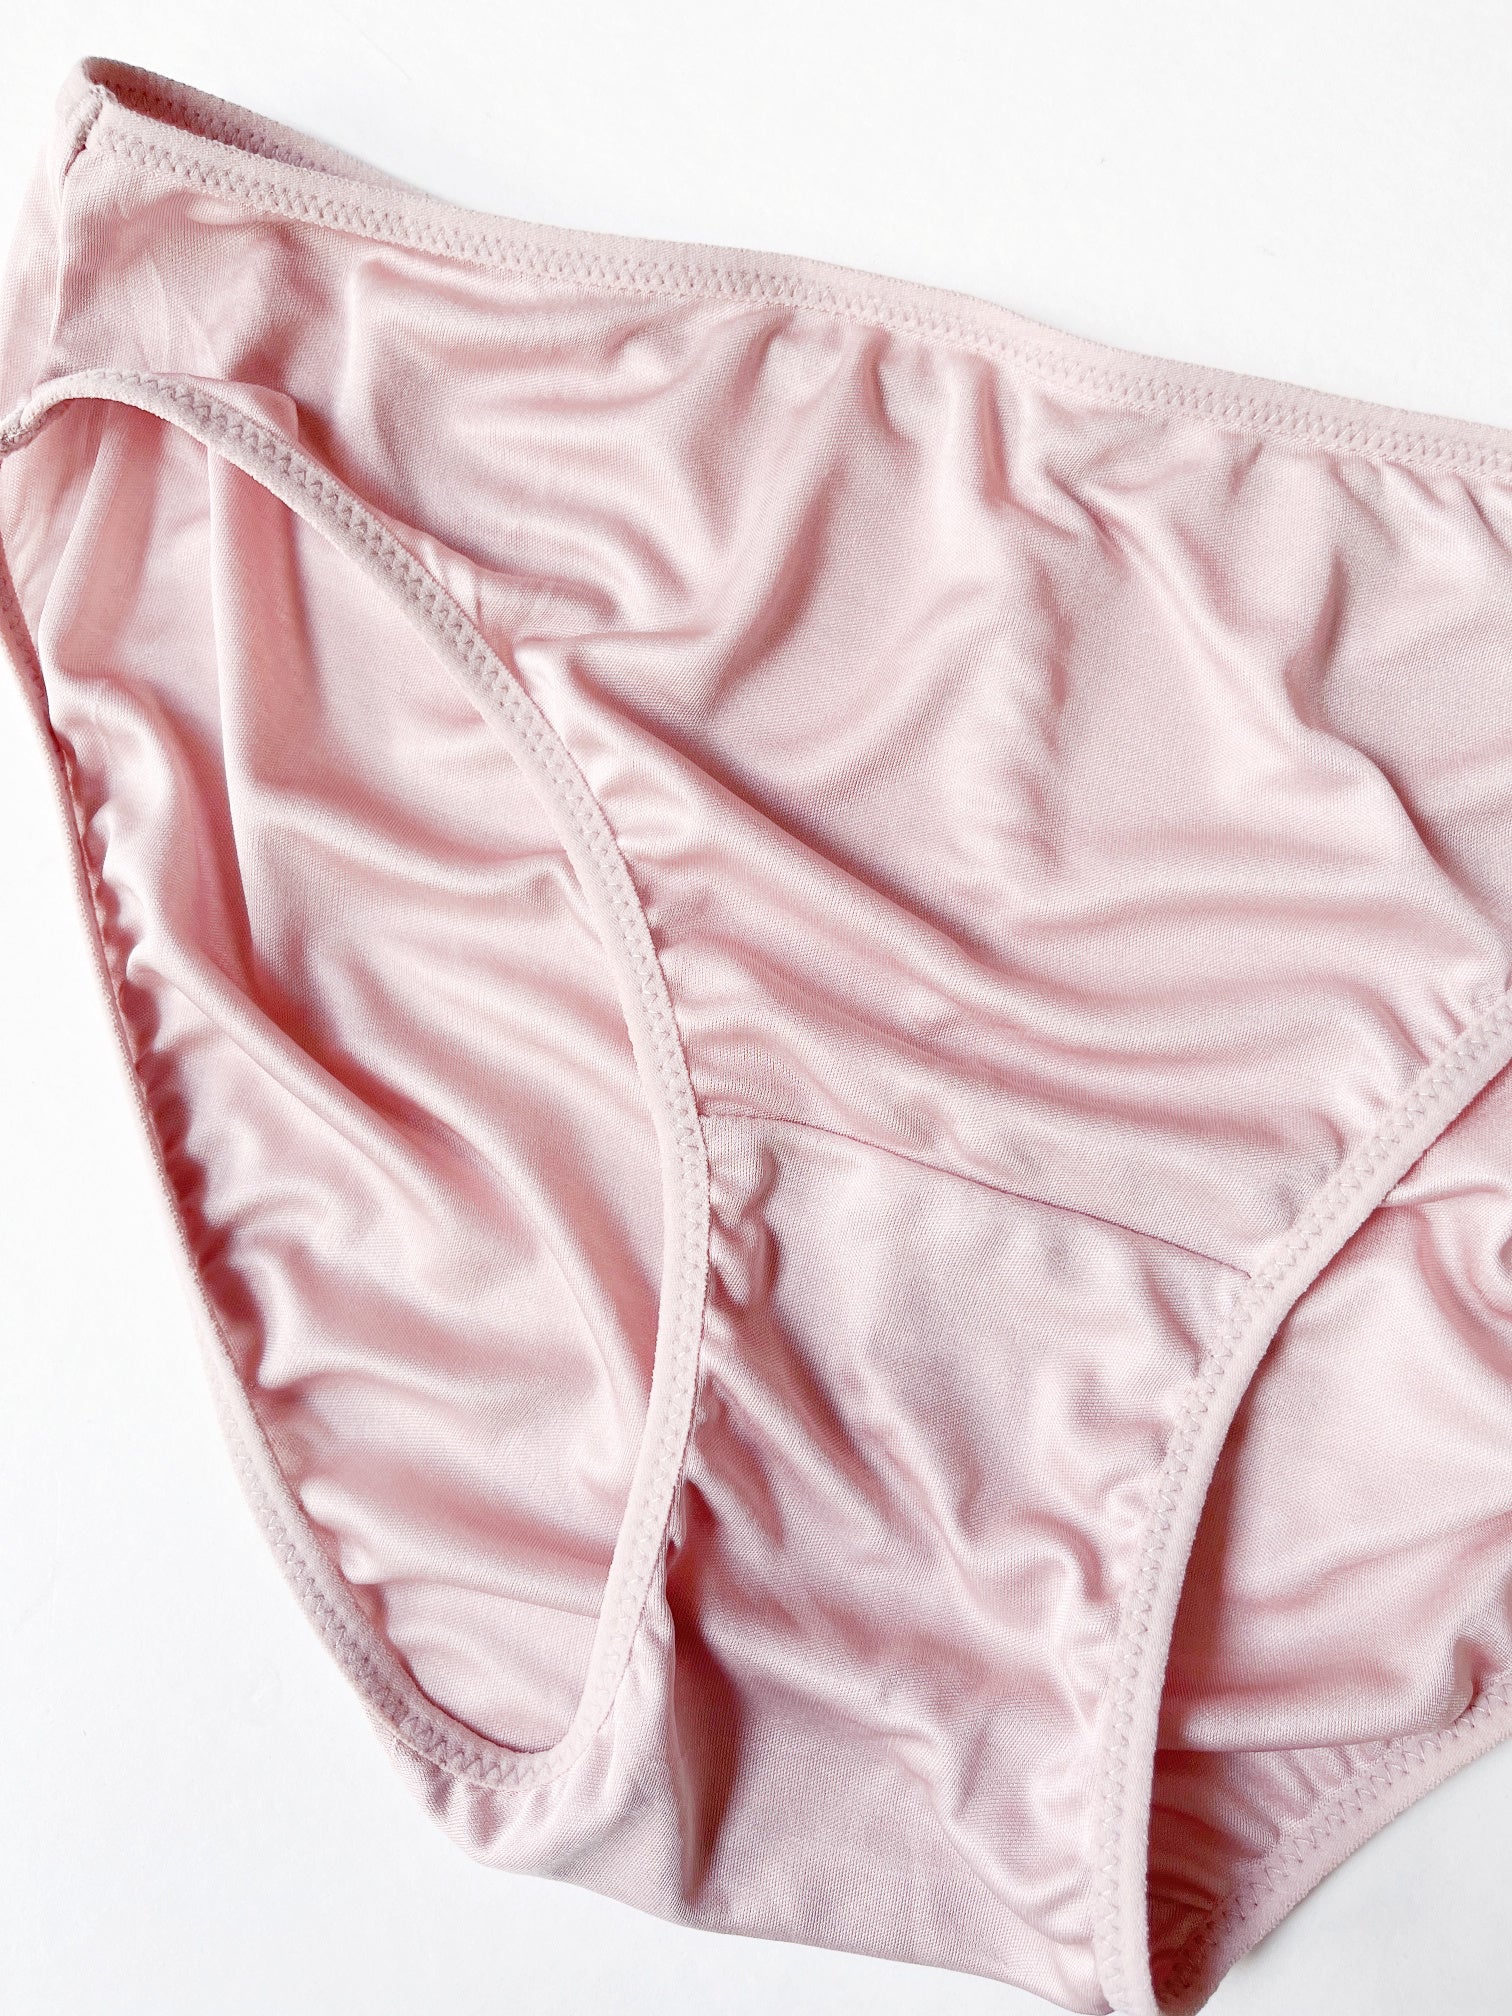 Blush rose silk underwear | Shop made in Canada silk panties